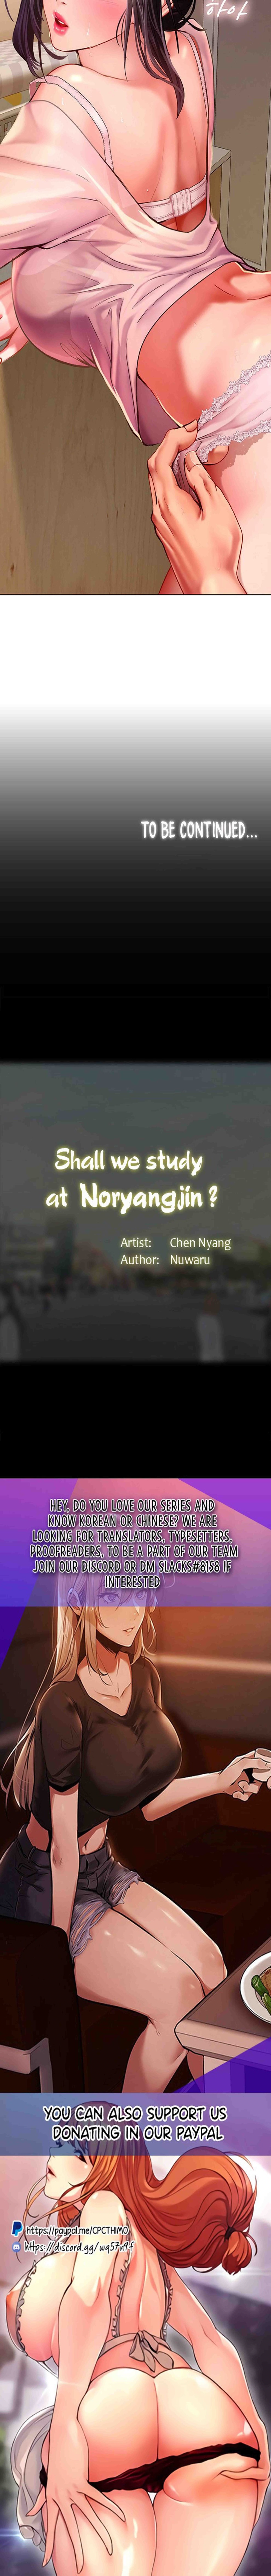 Should I Study at NORYANGJIN48 (21)